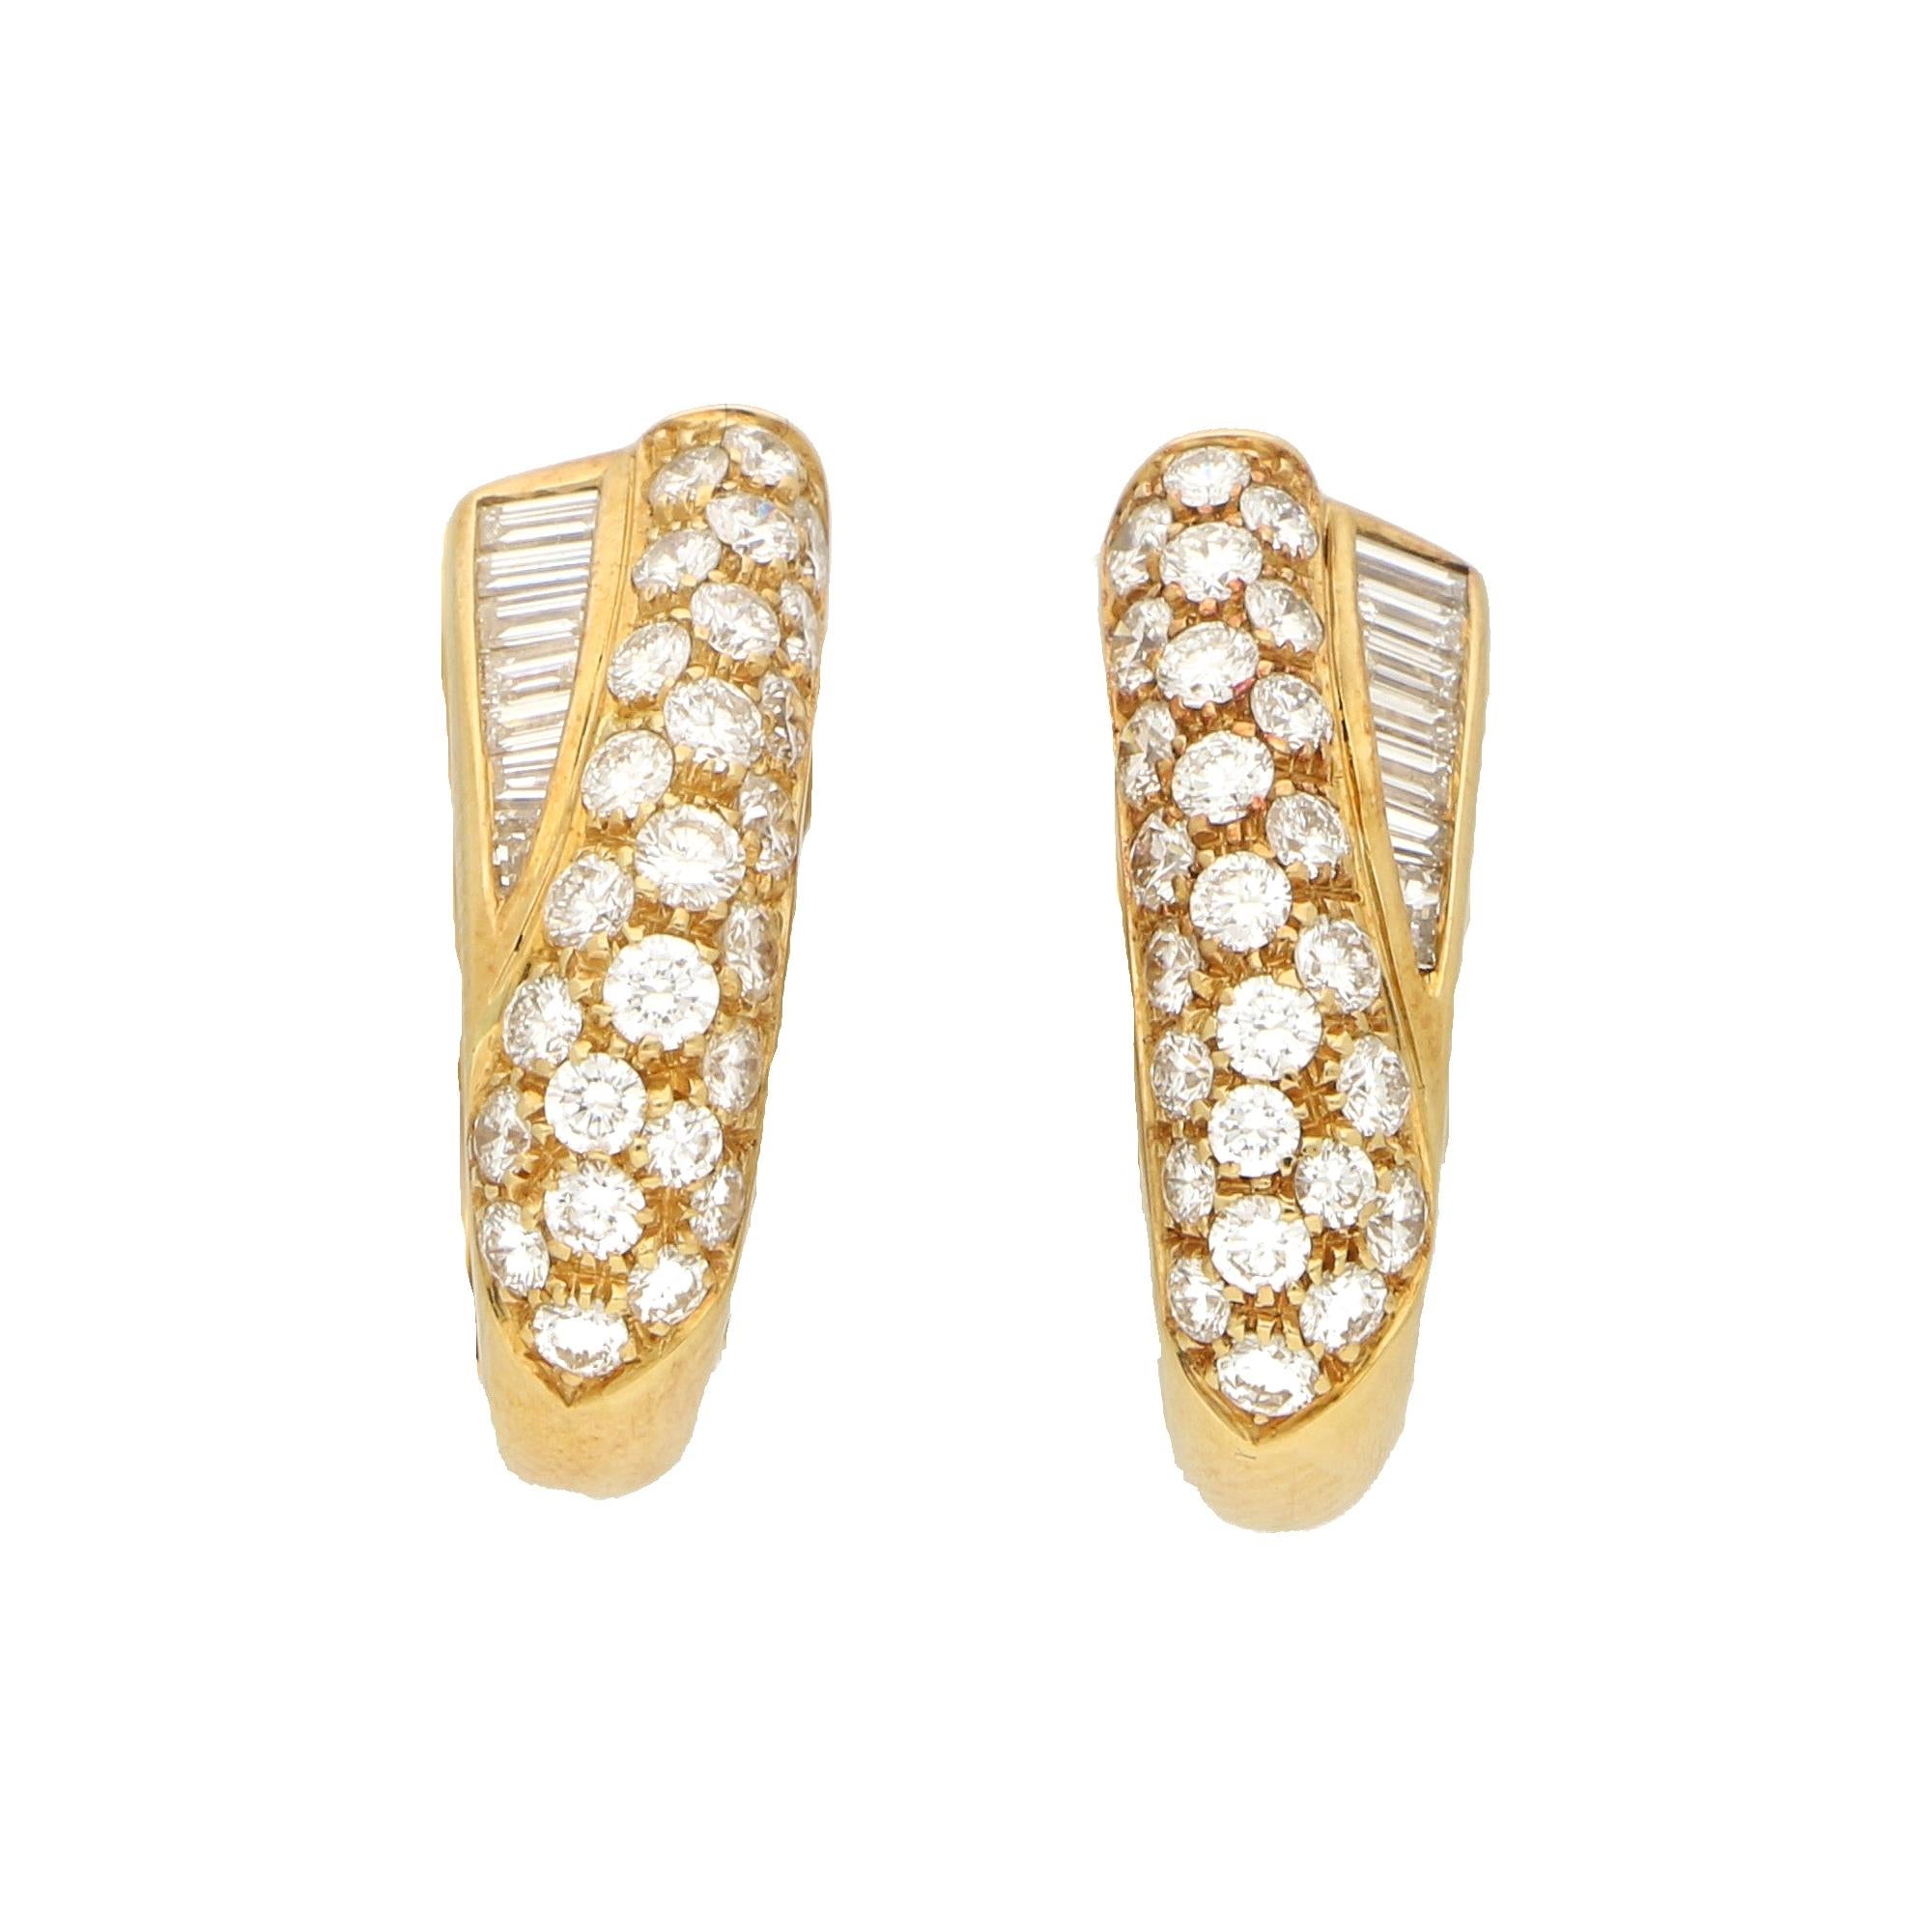 Boucheron Diamond Clip-On Earrings in 18ct Yellow Gold 1.00ct